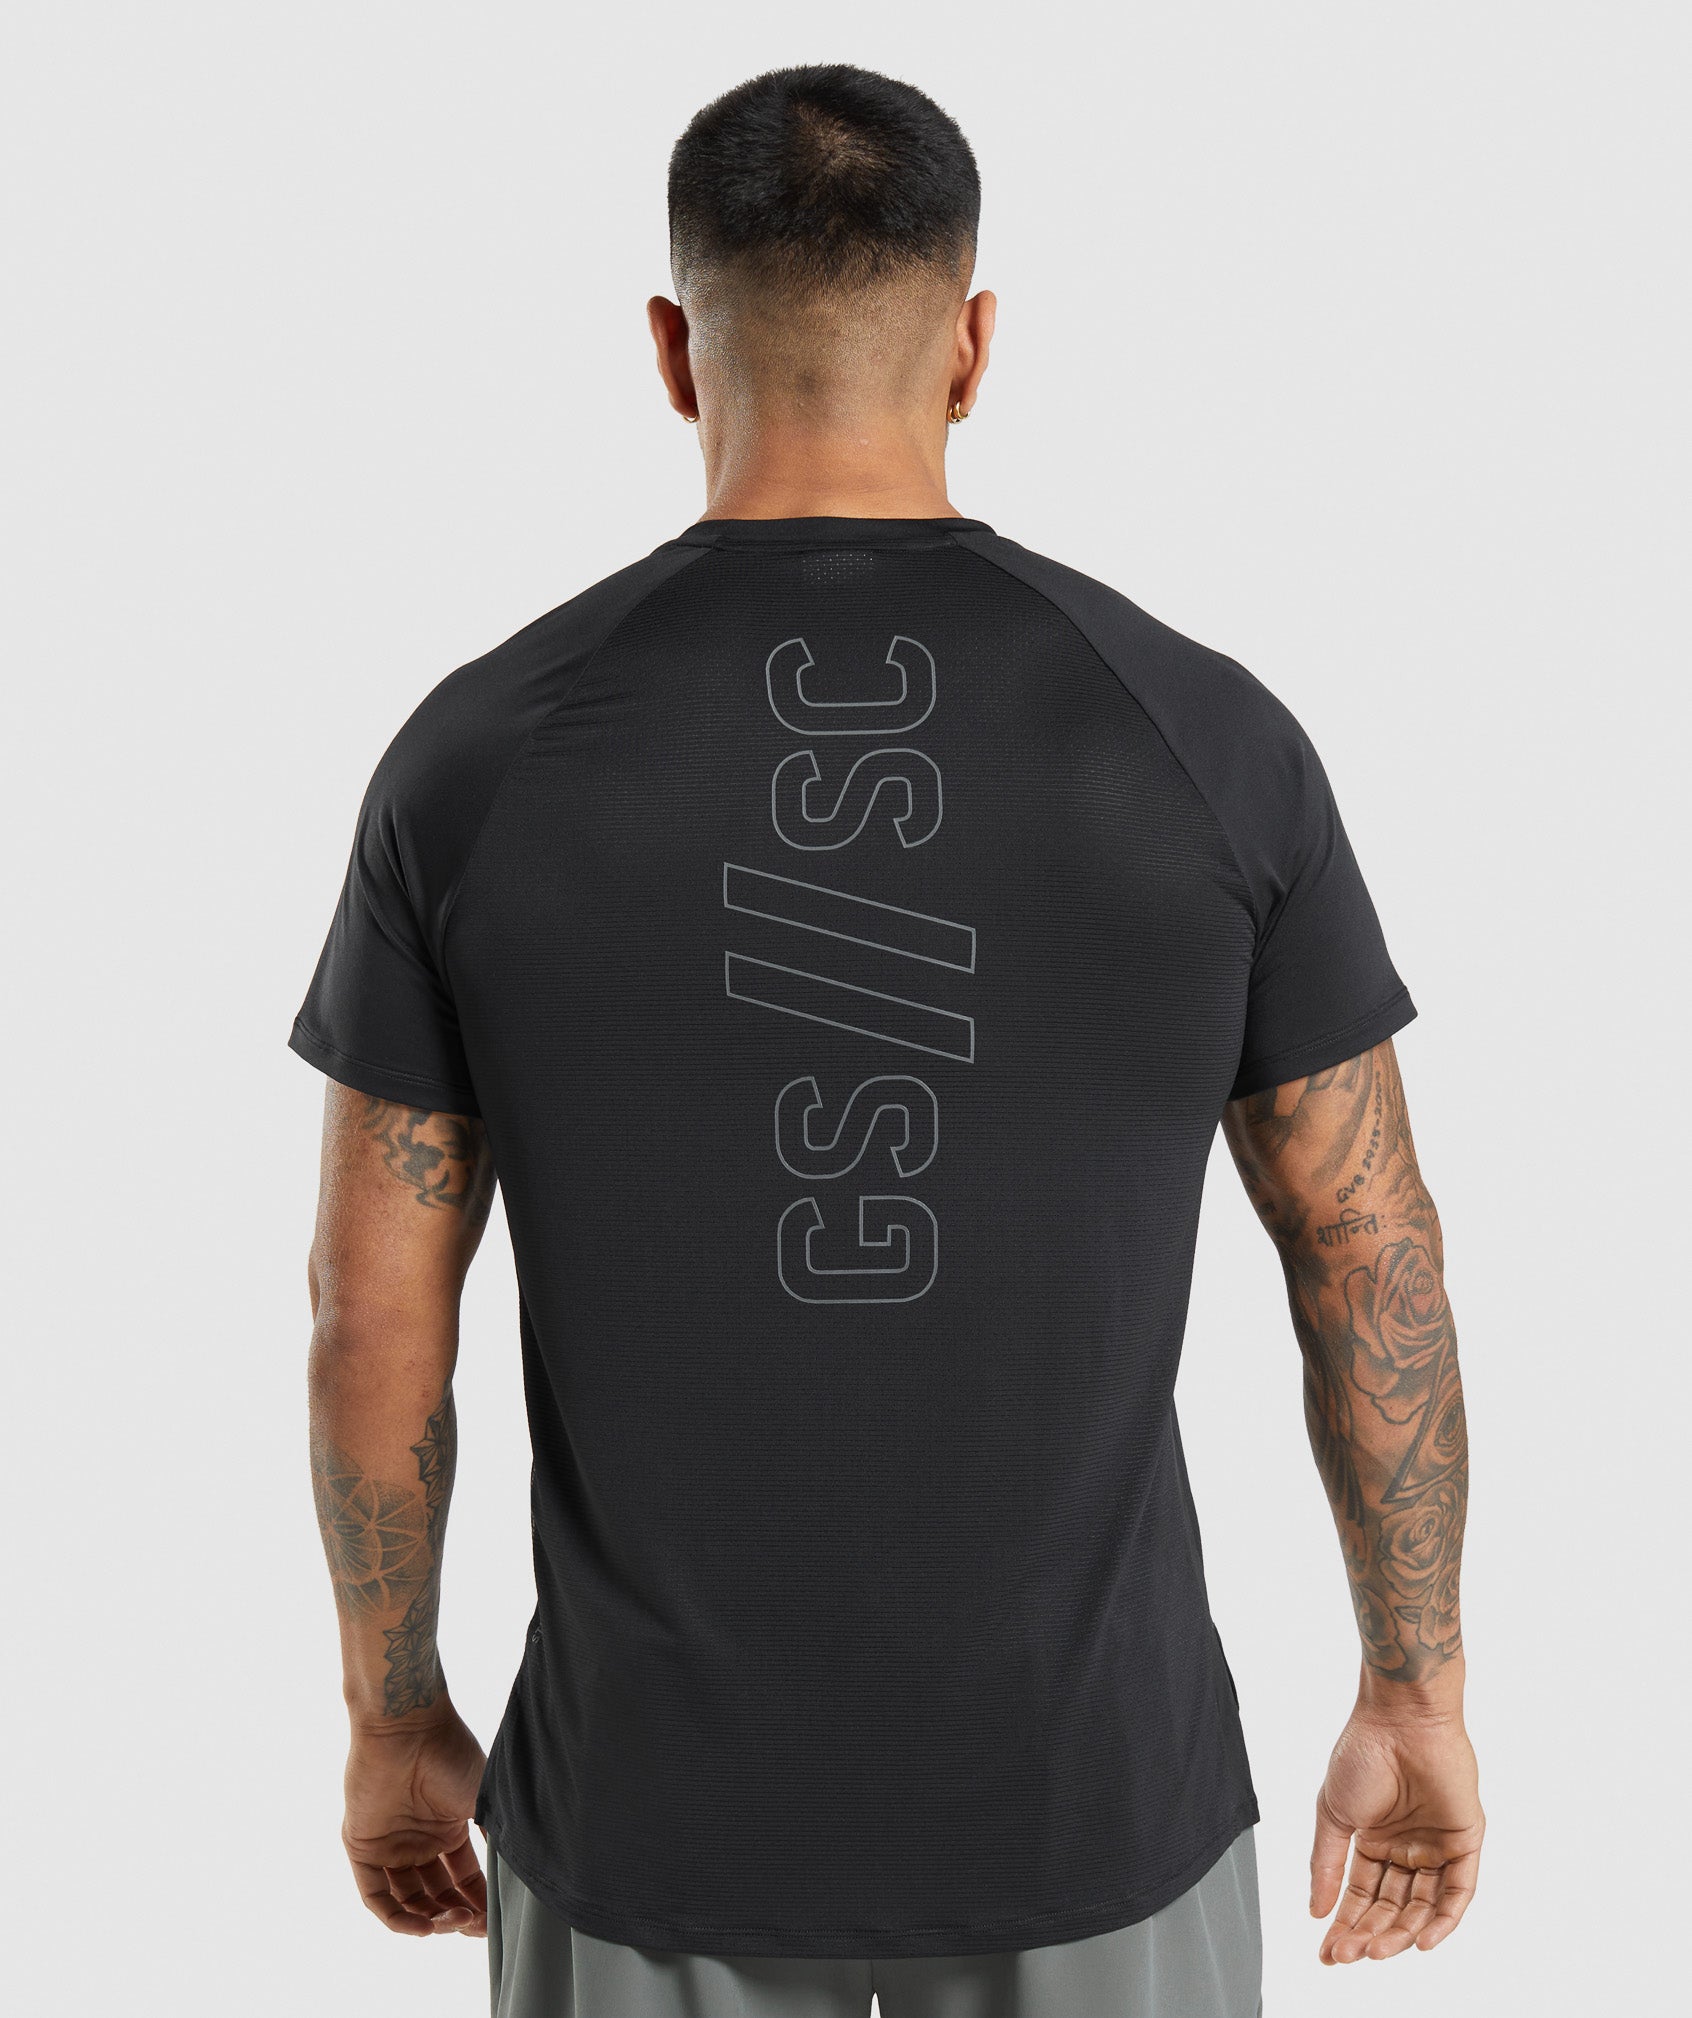 Gymshark//Steve Cook T-Shirt in Black - view 2